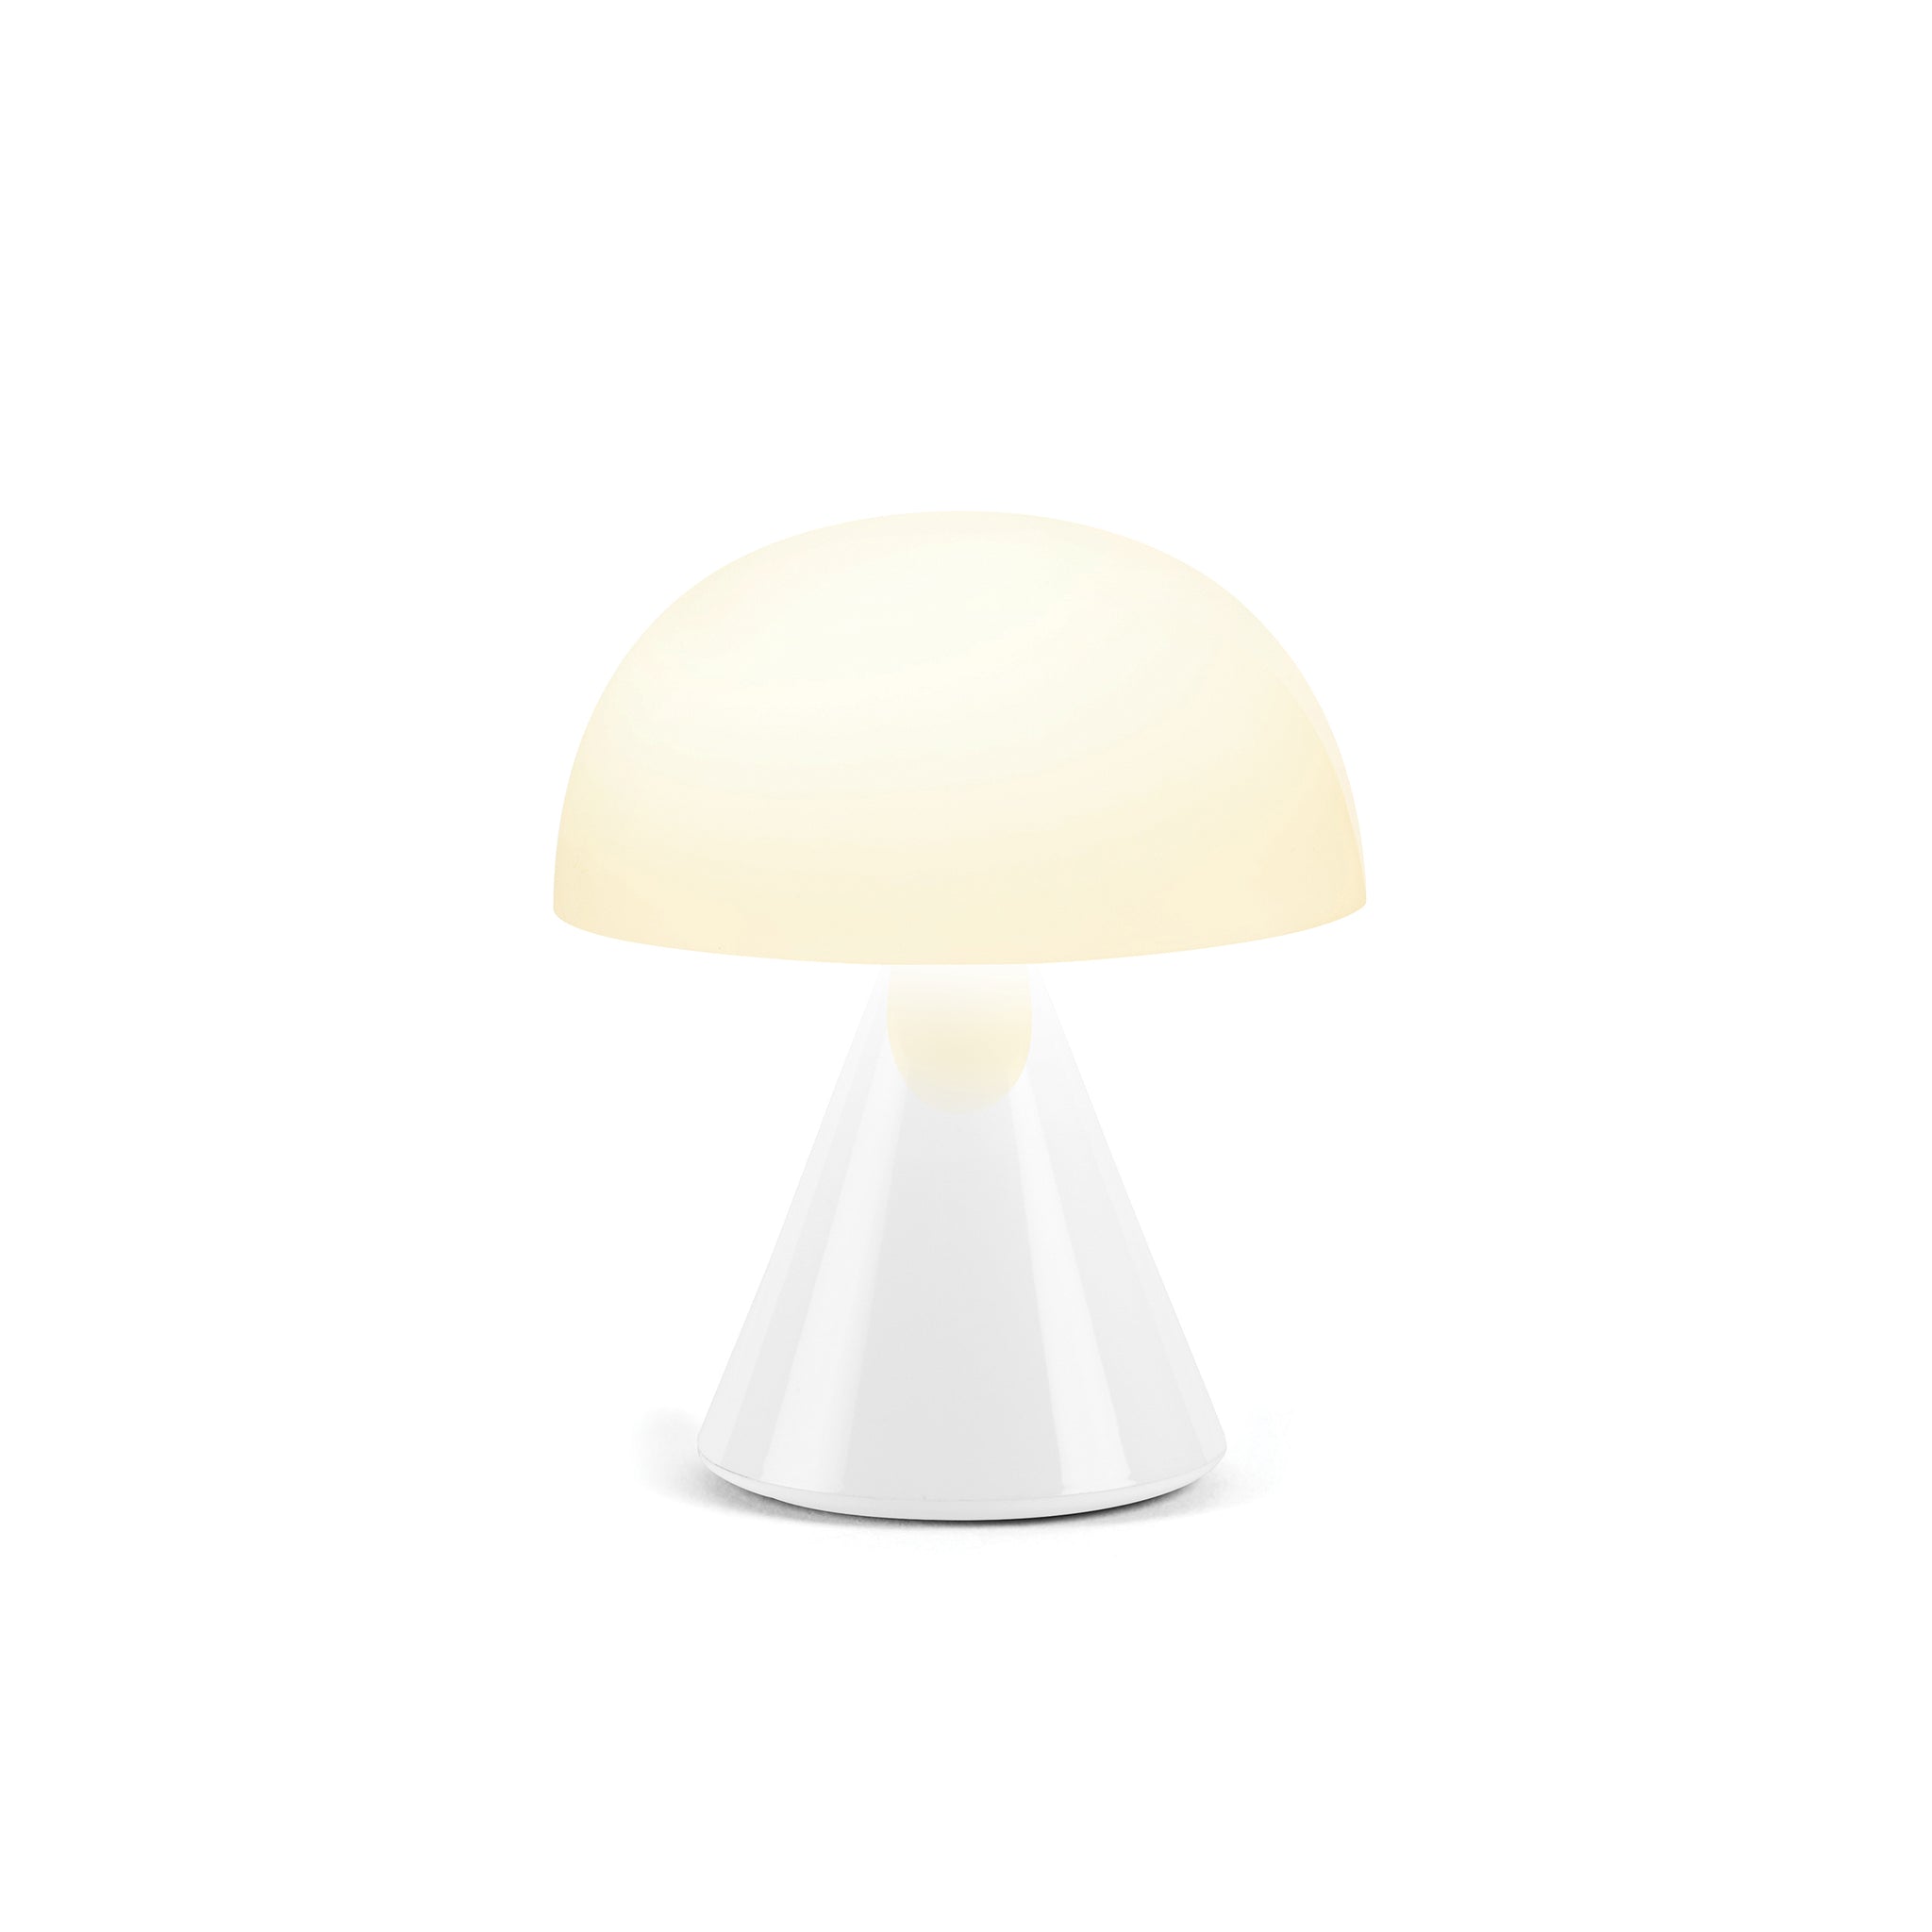 Lexon Mina Small│Oplaadbare LED lamp Glossy White│art. LH60WG│voorkant witte achtergrond met warm licht aan